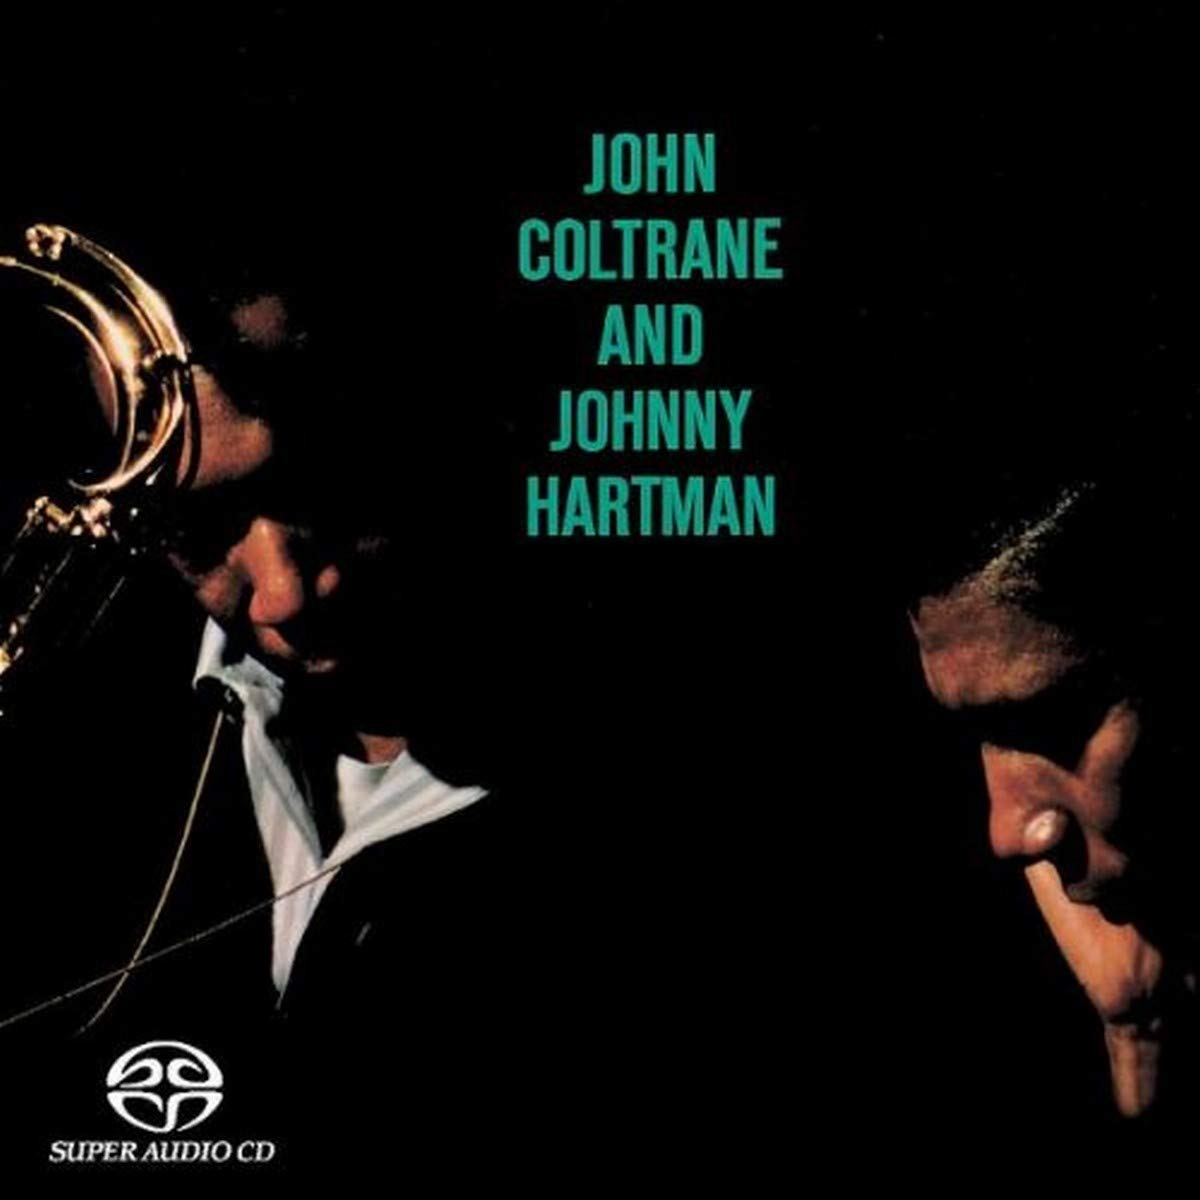 John Coltrane & Johnny Hartman — You are too beautiful cover artwork